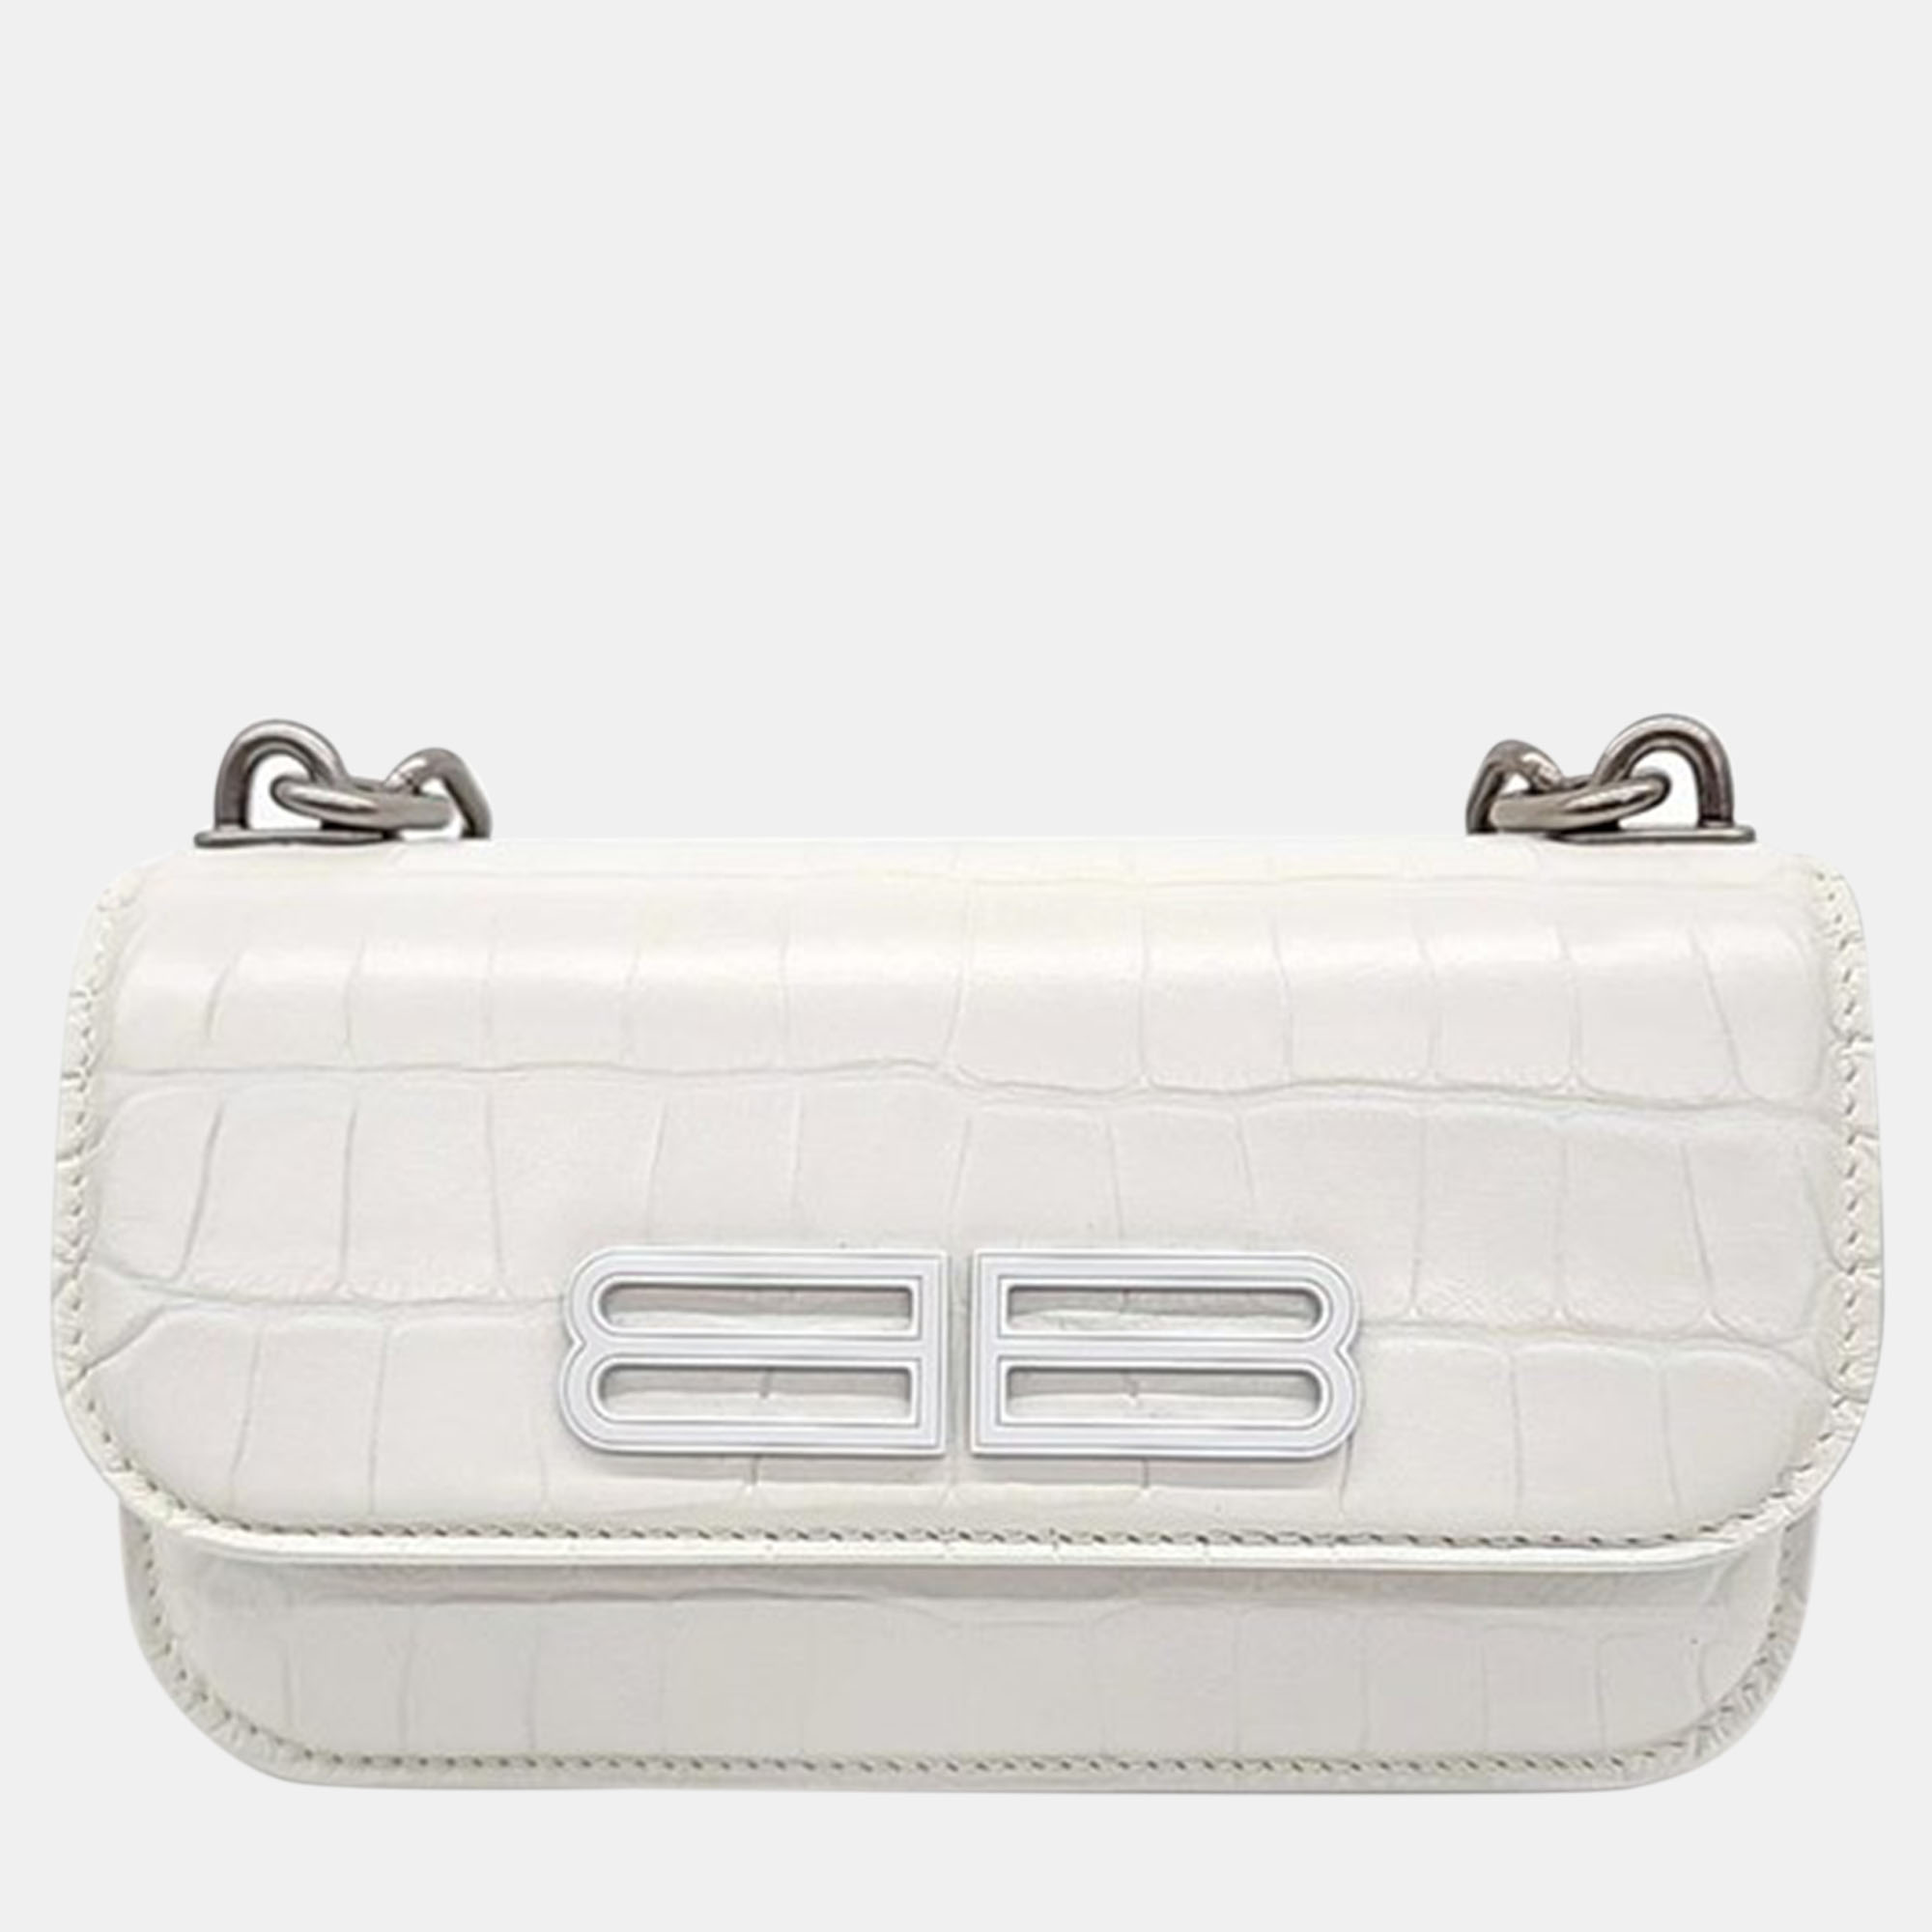 Balenciaga white patterned leather xs gossip shoulder bag